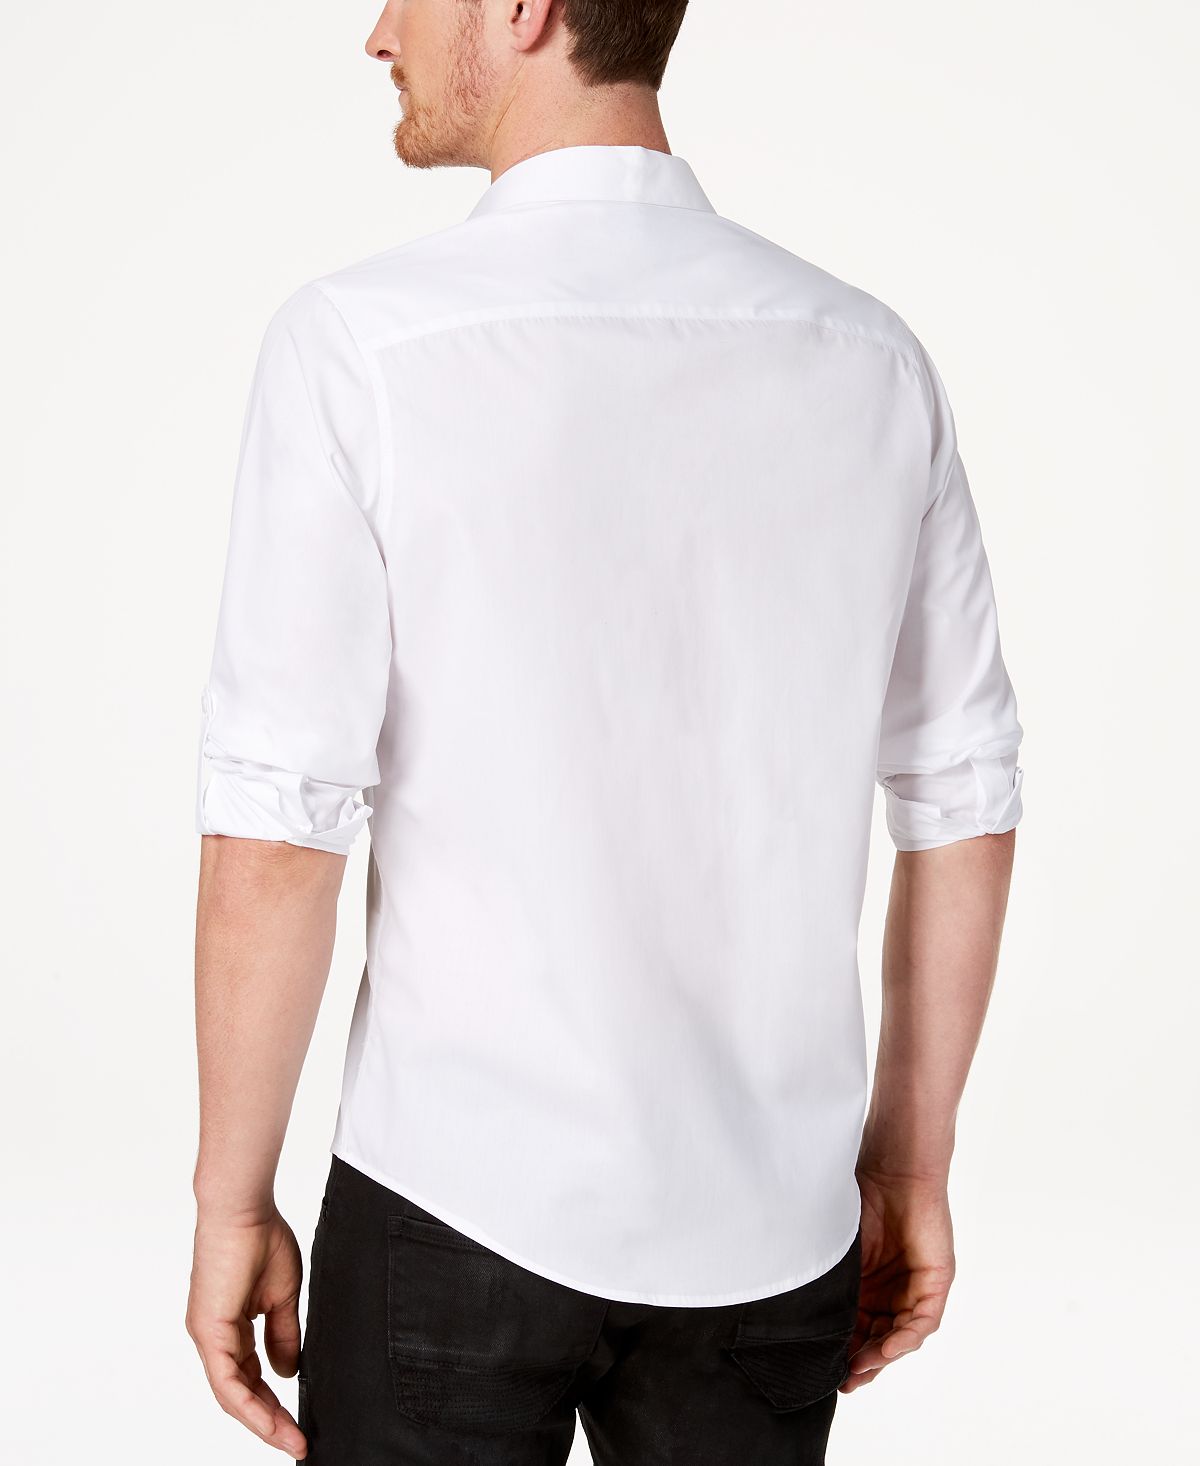 Inc International Concepts Inc Utility Shirt White Pure